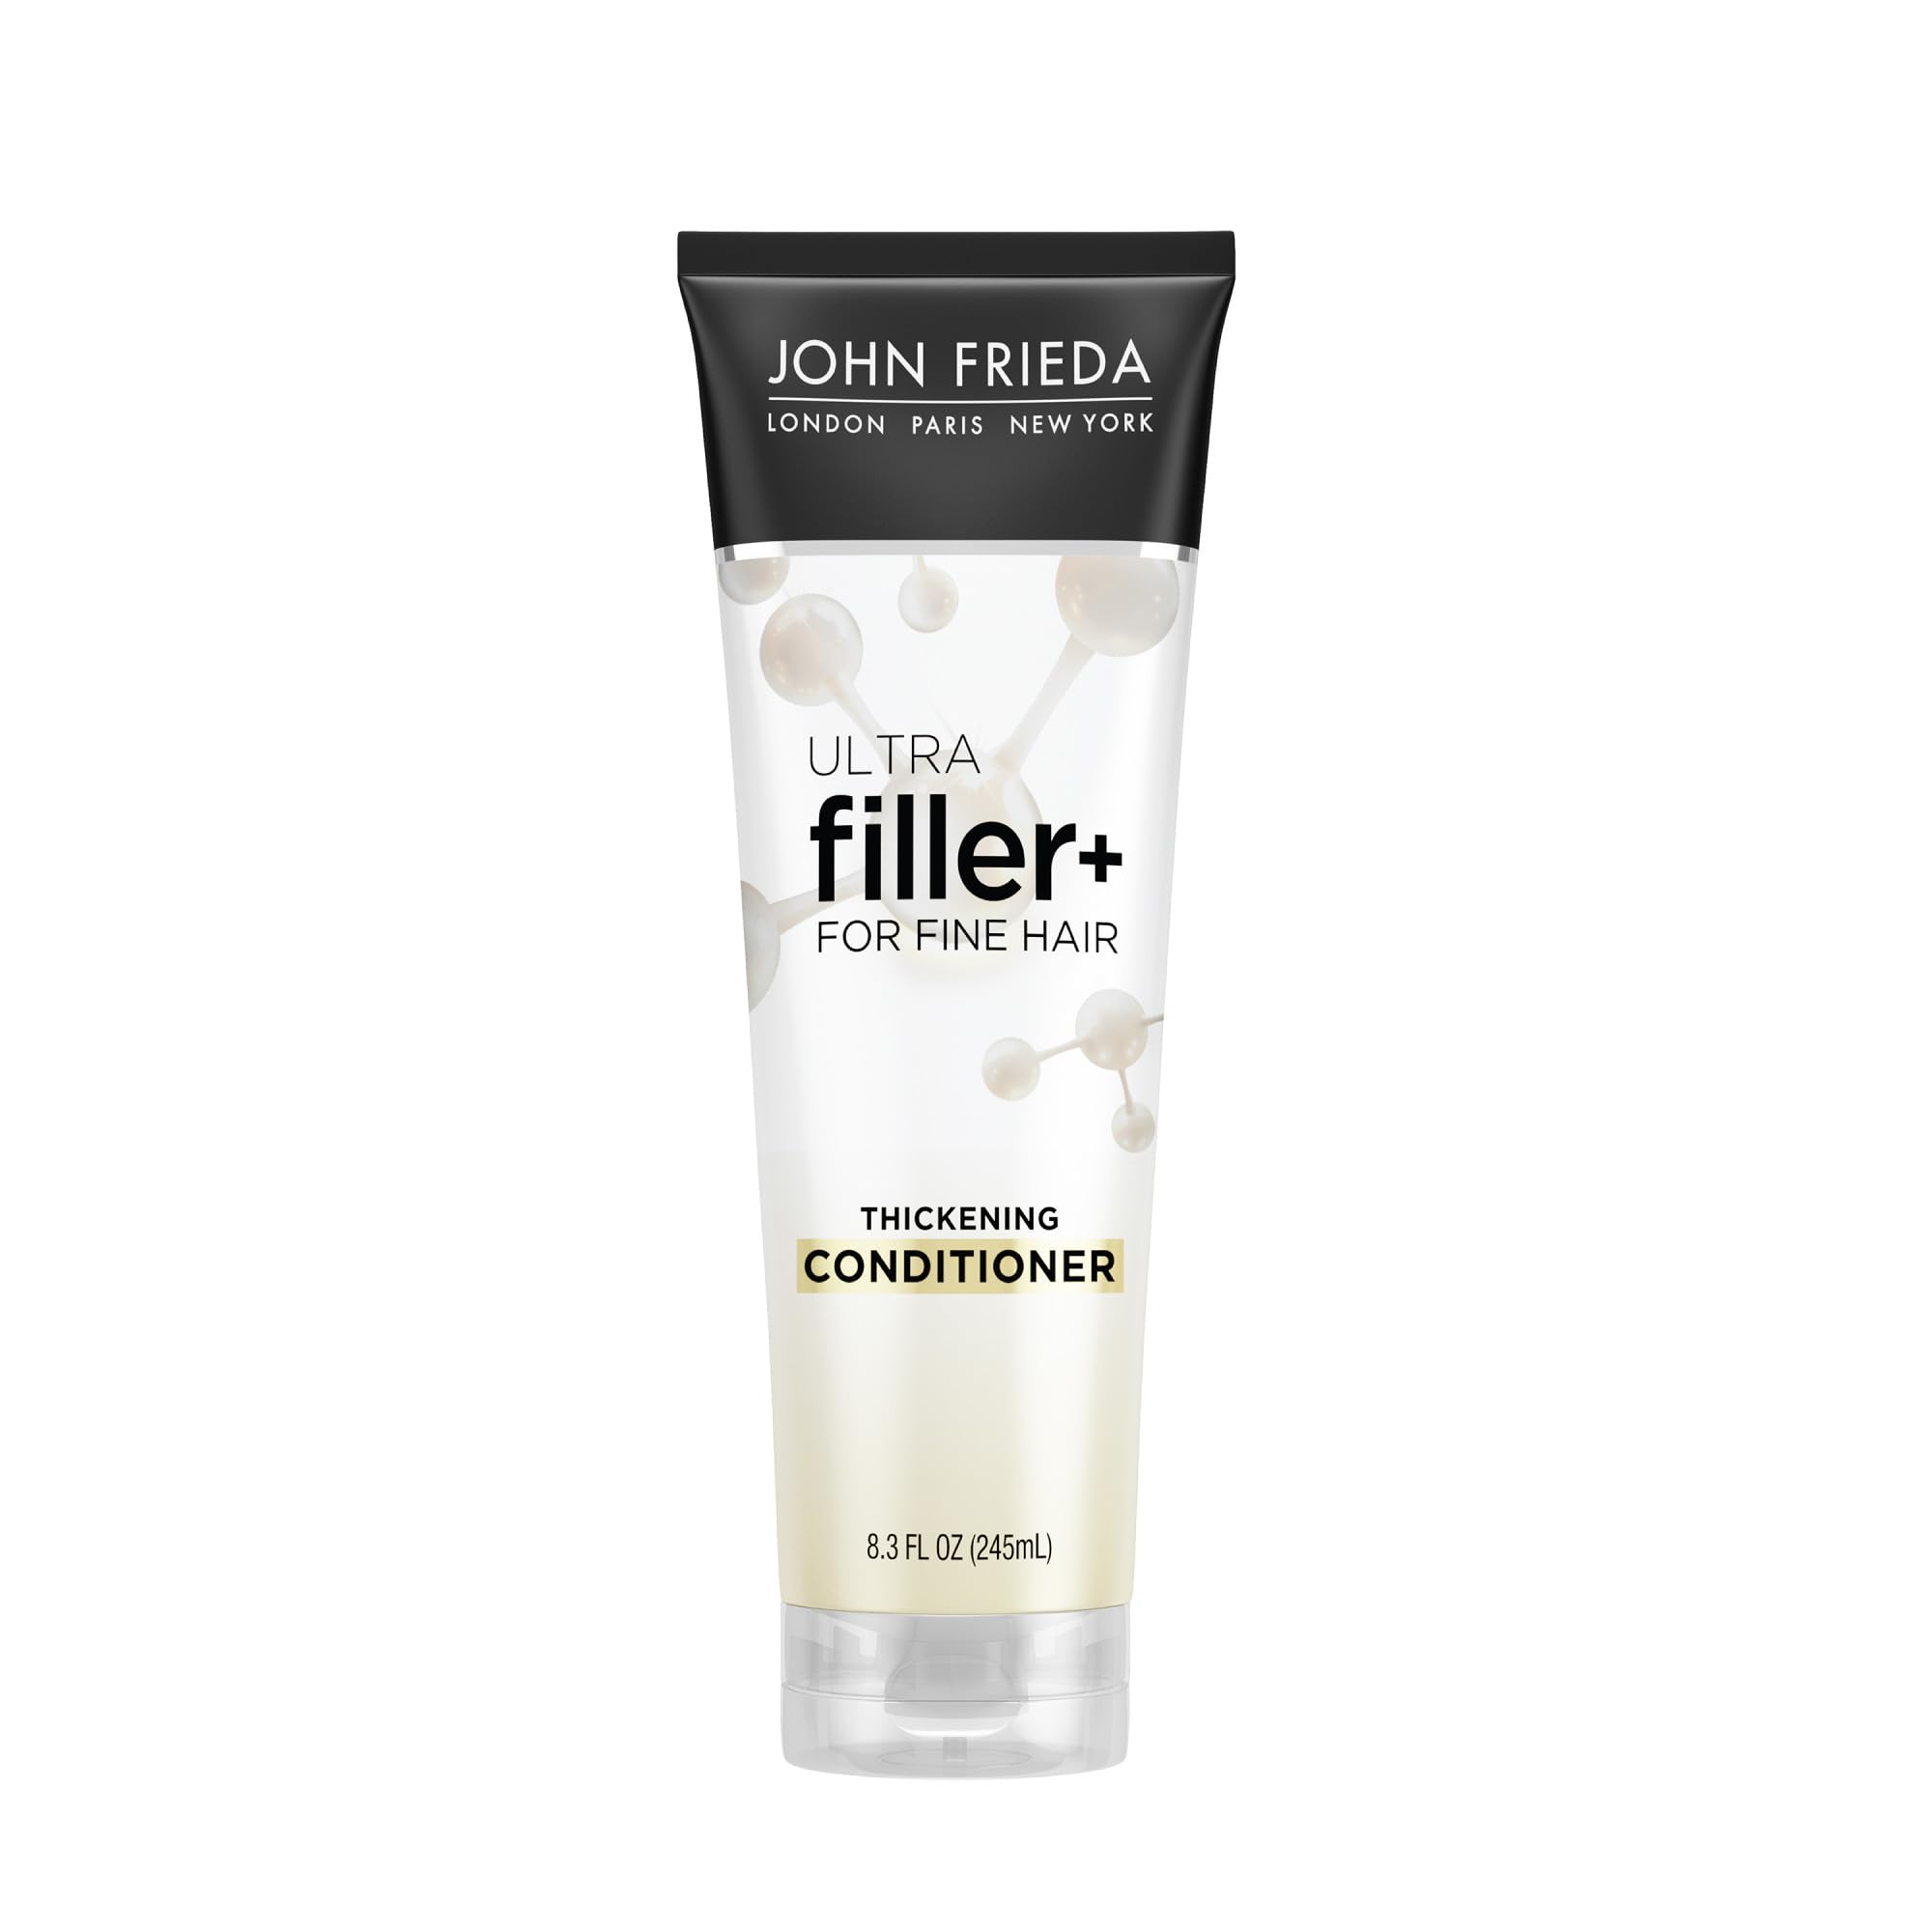 John Frieda ULTRAfiller+ Thickening Conditioner for Fine Hair, Volumizing Conditioner, Biotin and Hyaluronic Acid Hair Thickening Conditioner for Thinning Hair, 8.3 Oz